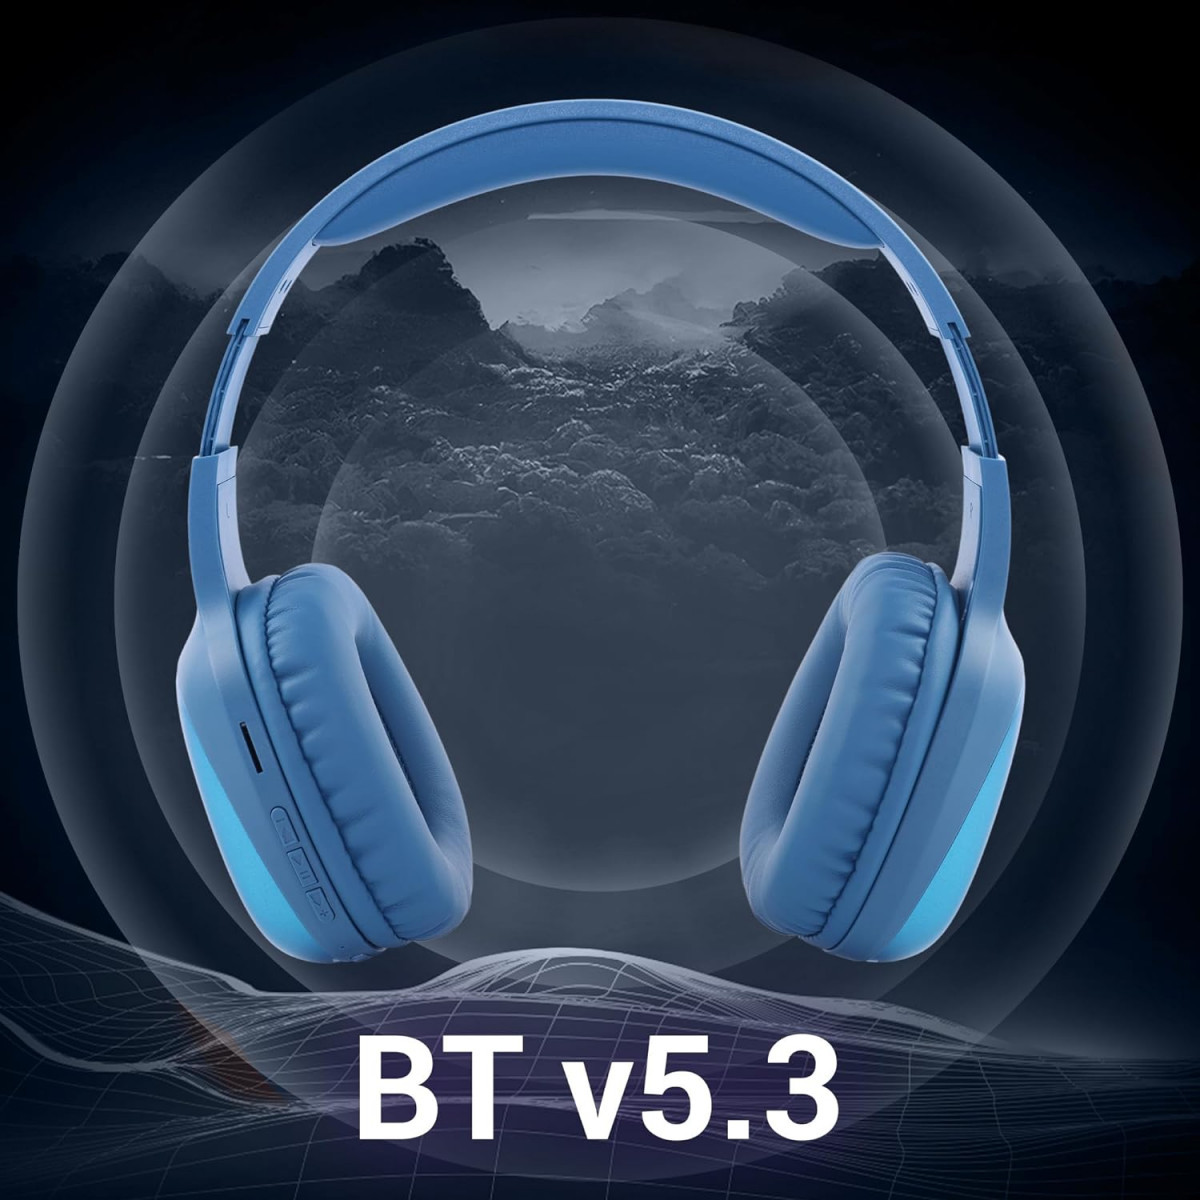 ZEBRONICS Thunder PRO Wireless Headphone with Dual Pairing Blue